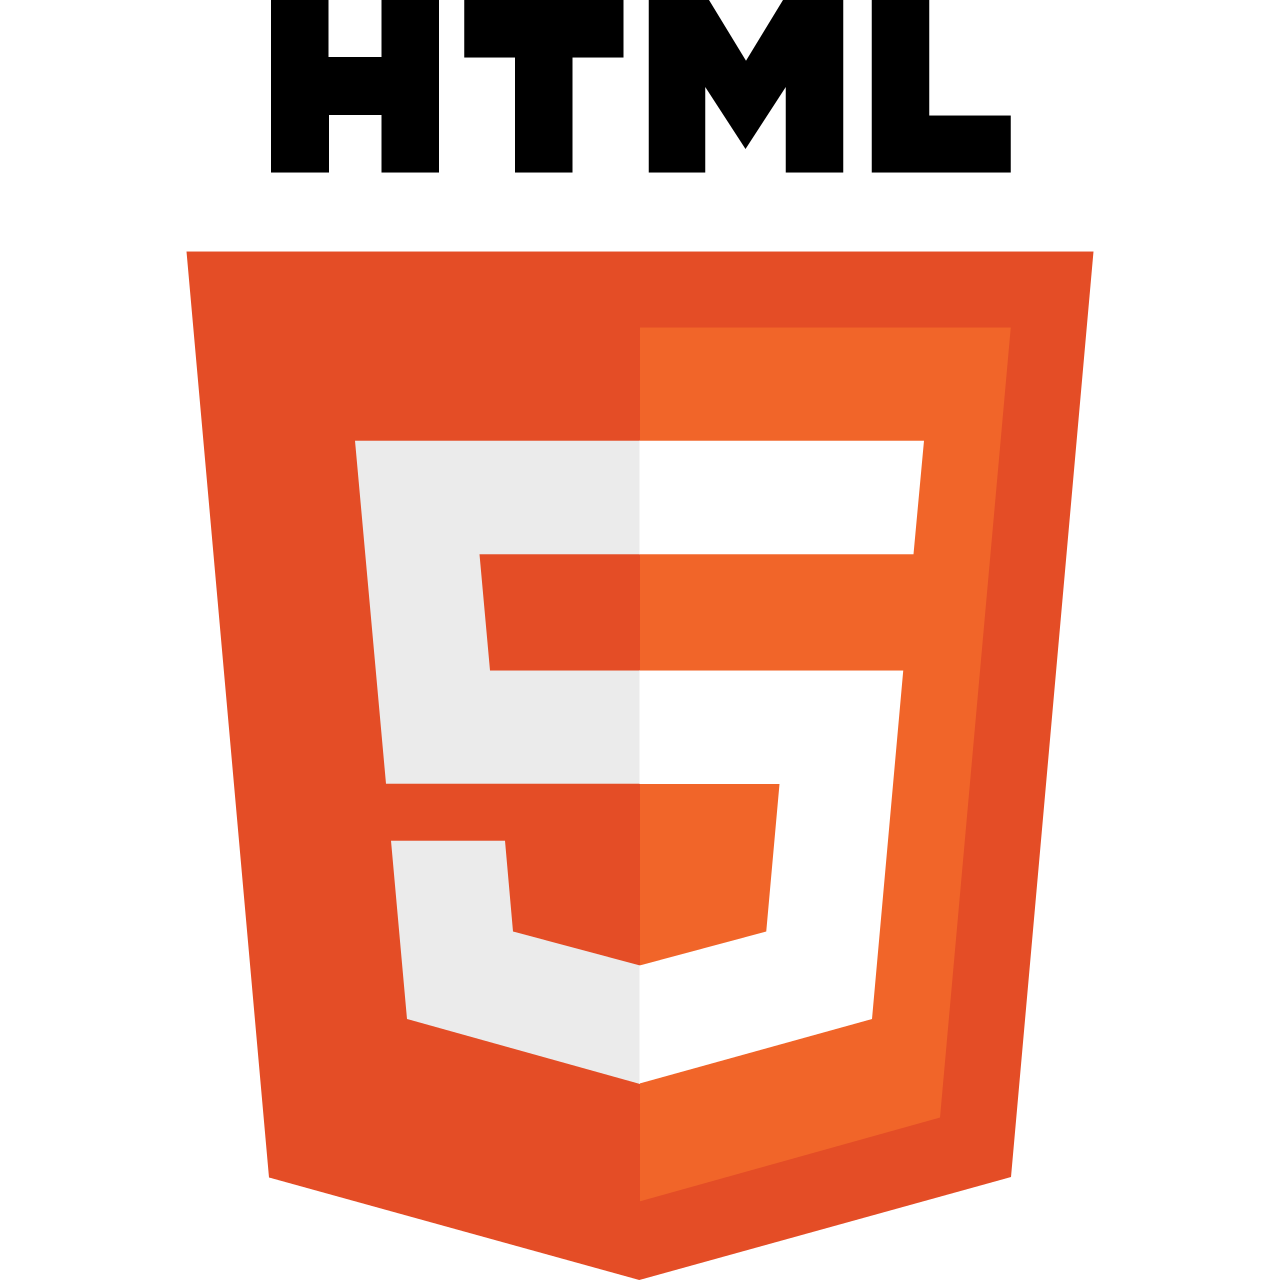 HTML - HTML5 - HyperText Markup Language, version 5